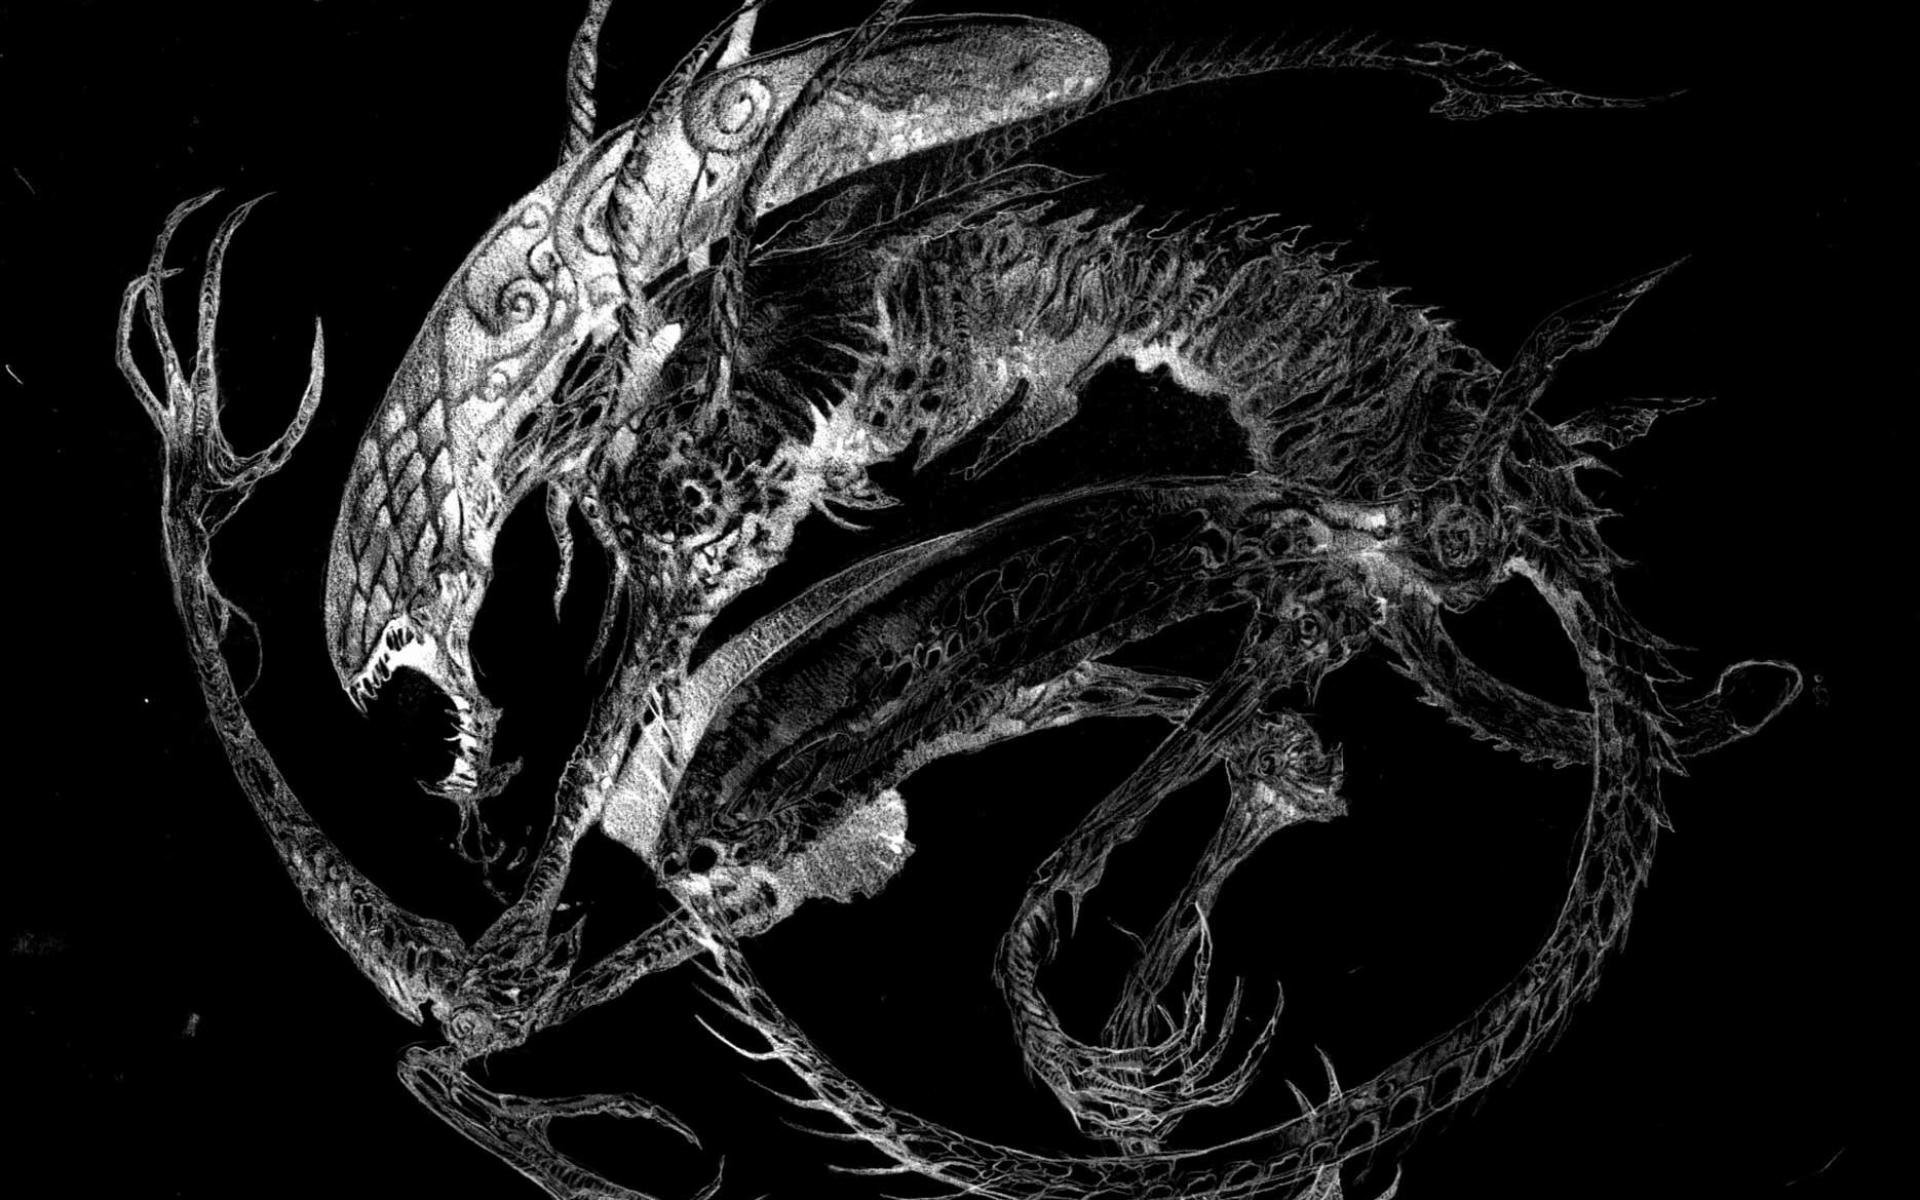 H R Giger Art Artwork Dark Evil Artistic Horror Fantasy Sci fi Alien Aliens Xenomorph Wallpaper At Dark Wallpapers